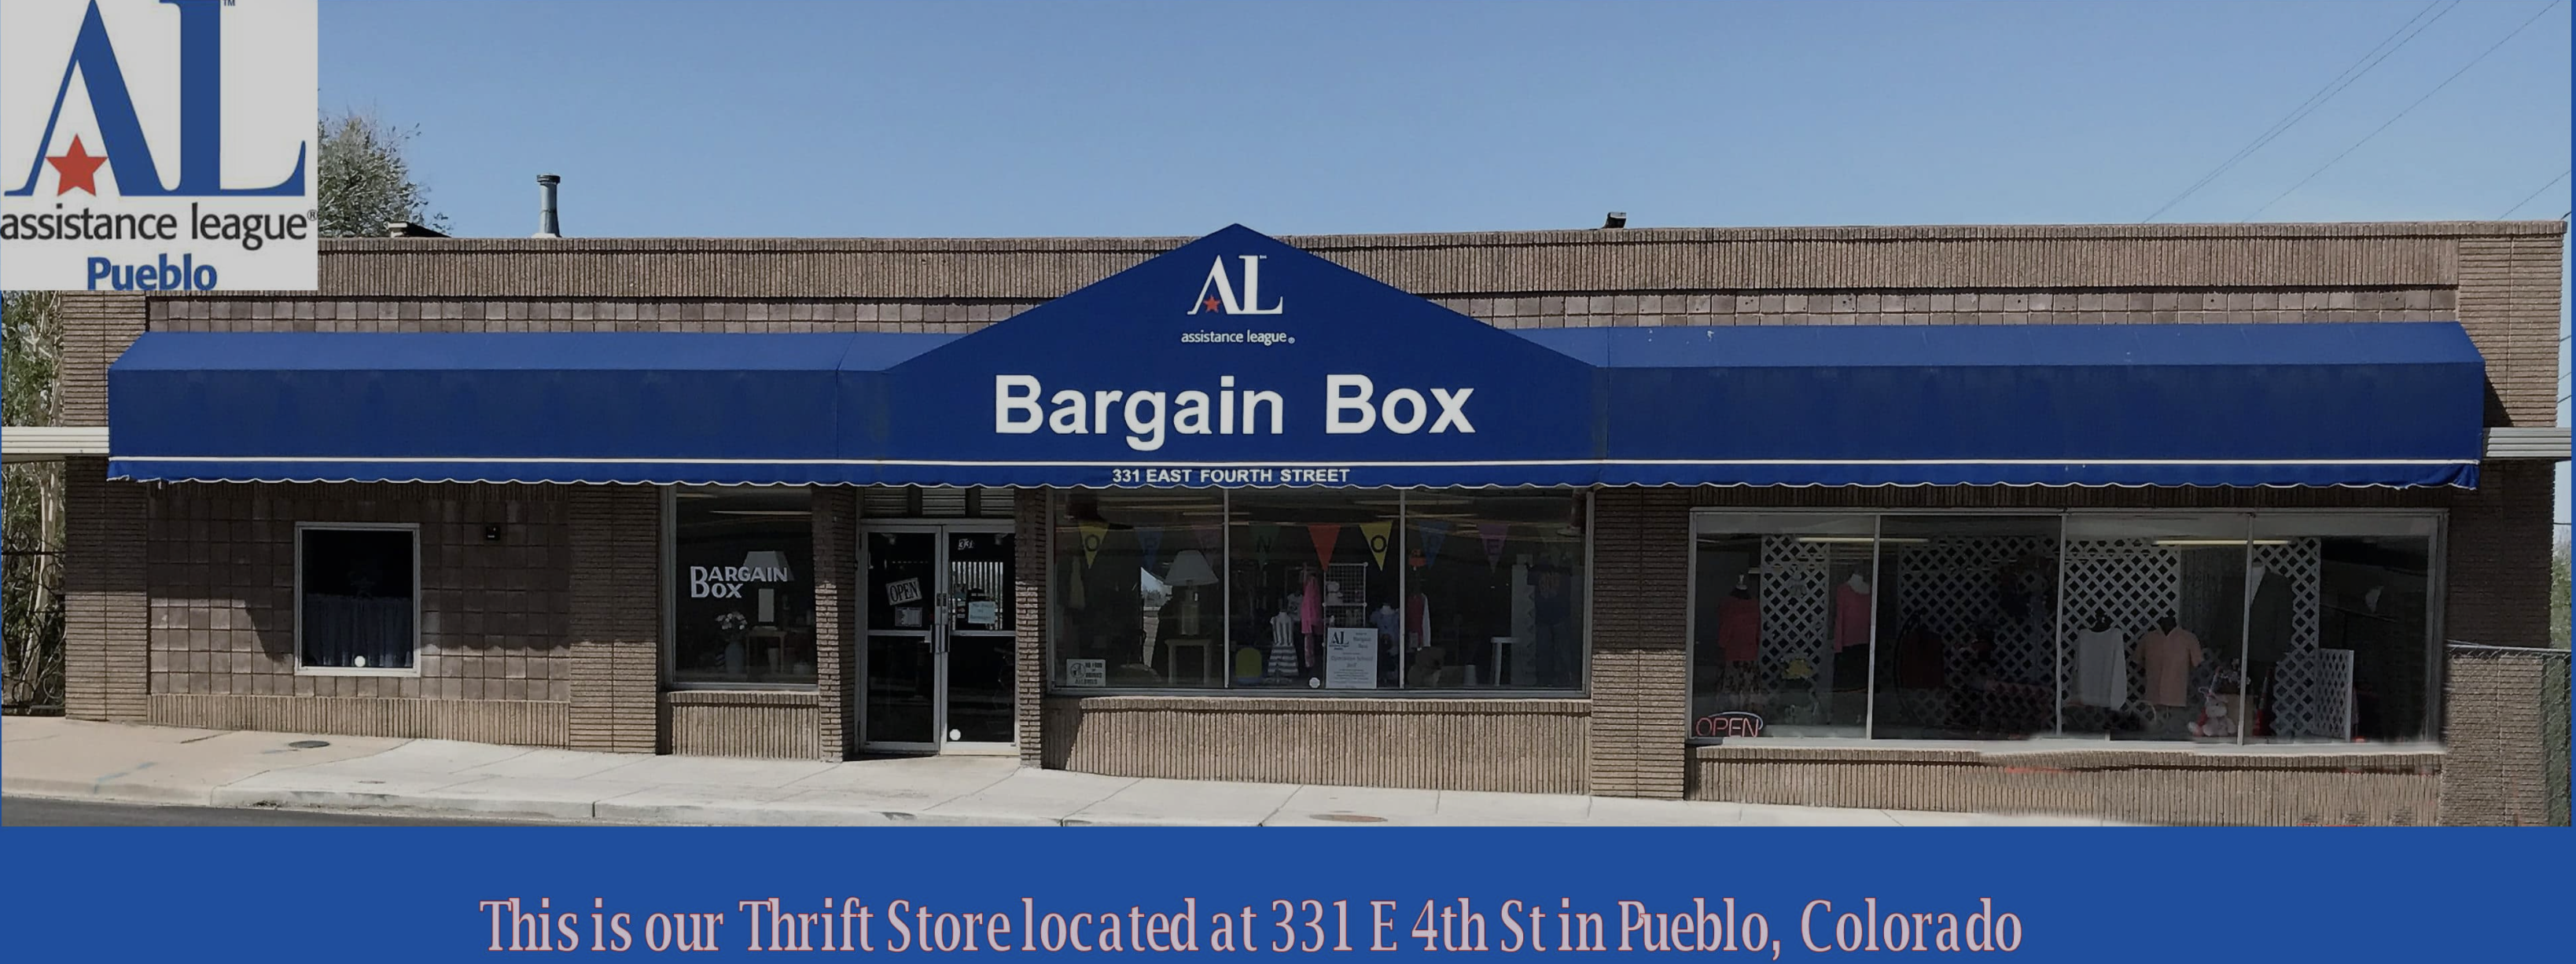 Bargain Box Storefront Location